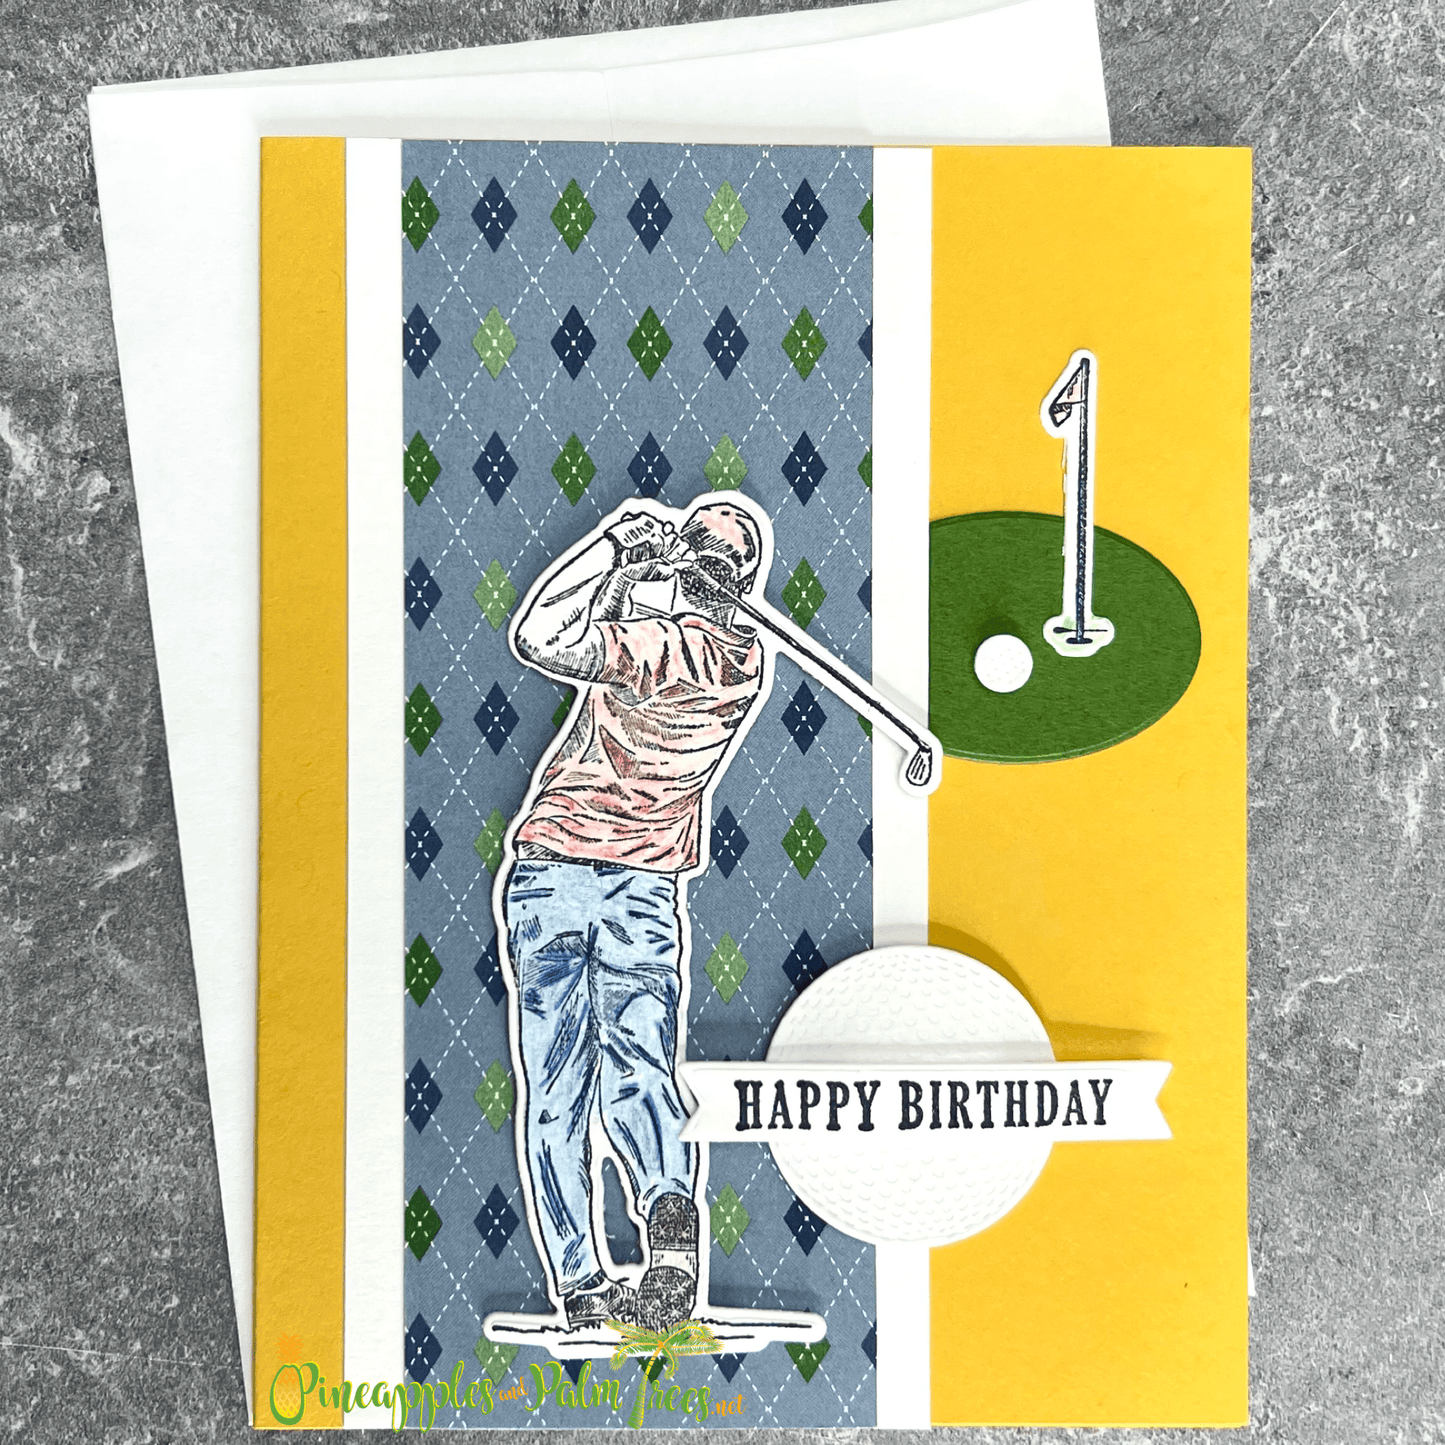 Greeting Card: Happy Birthday - golf blue & yellow